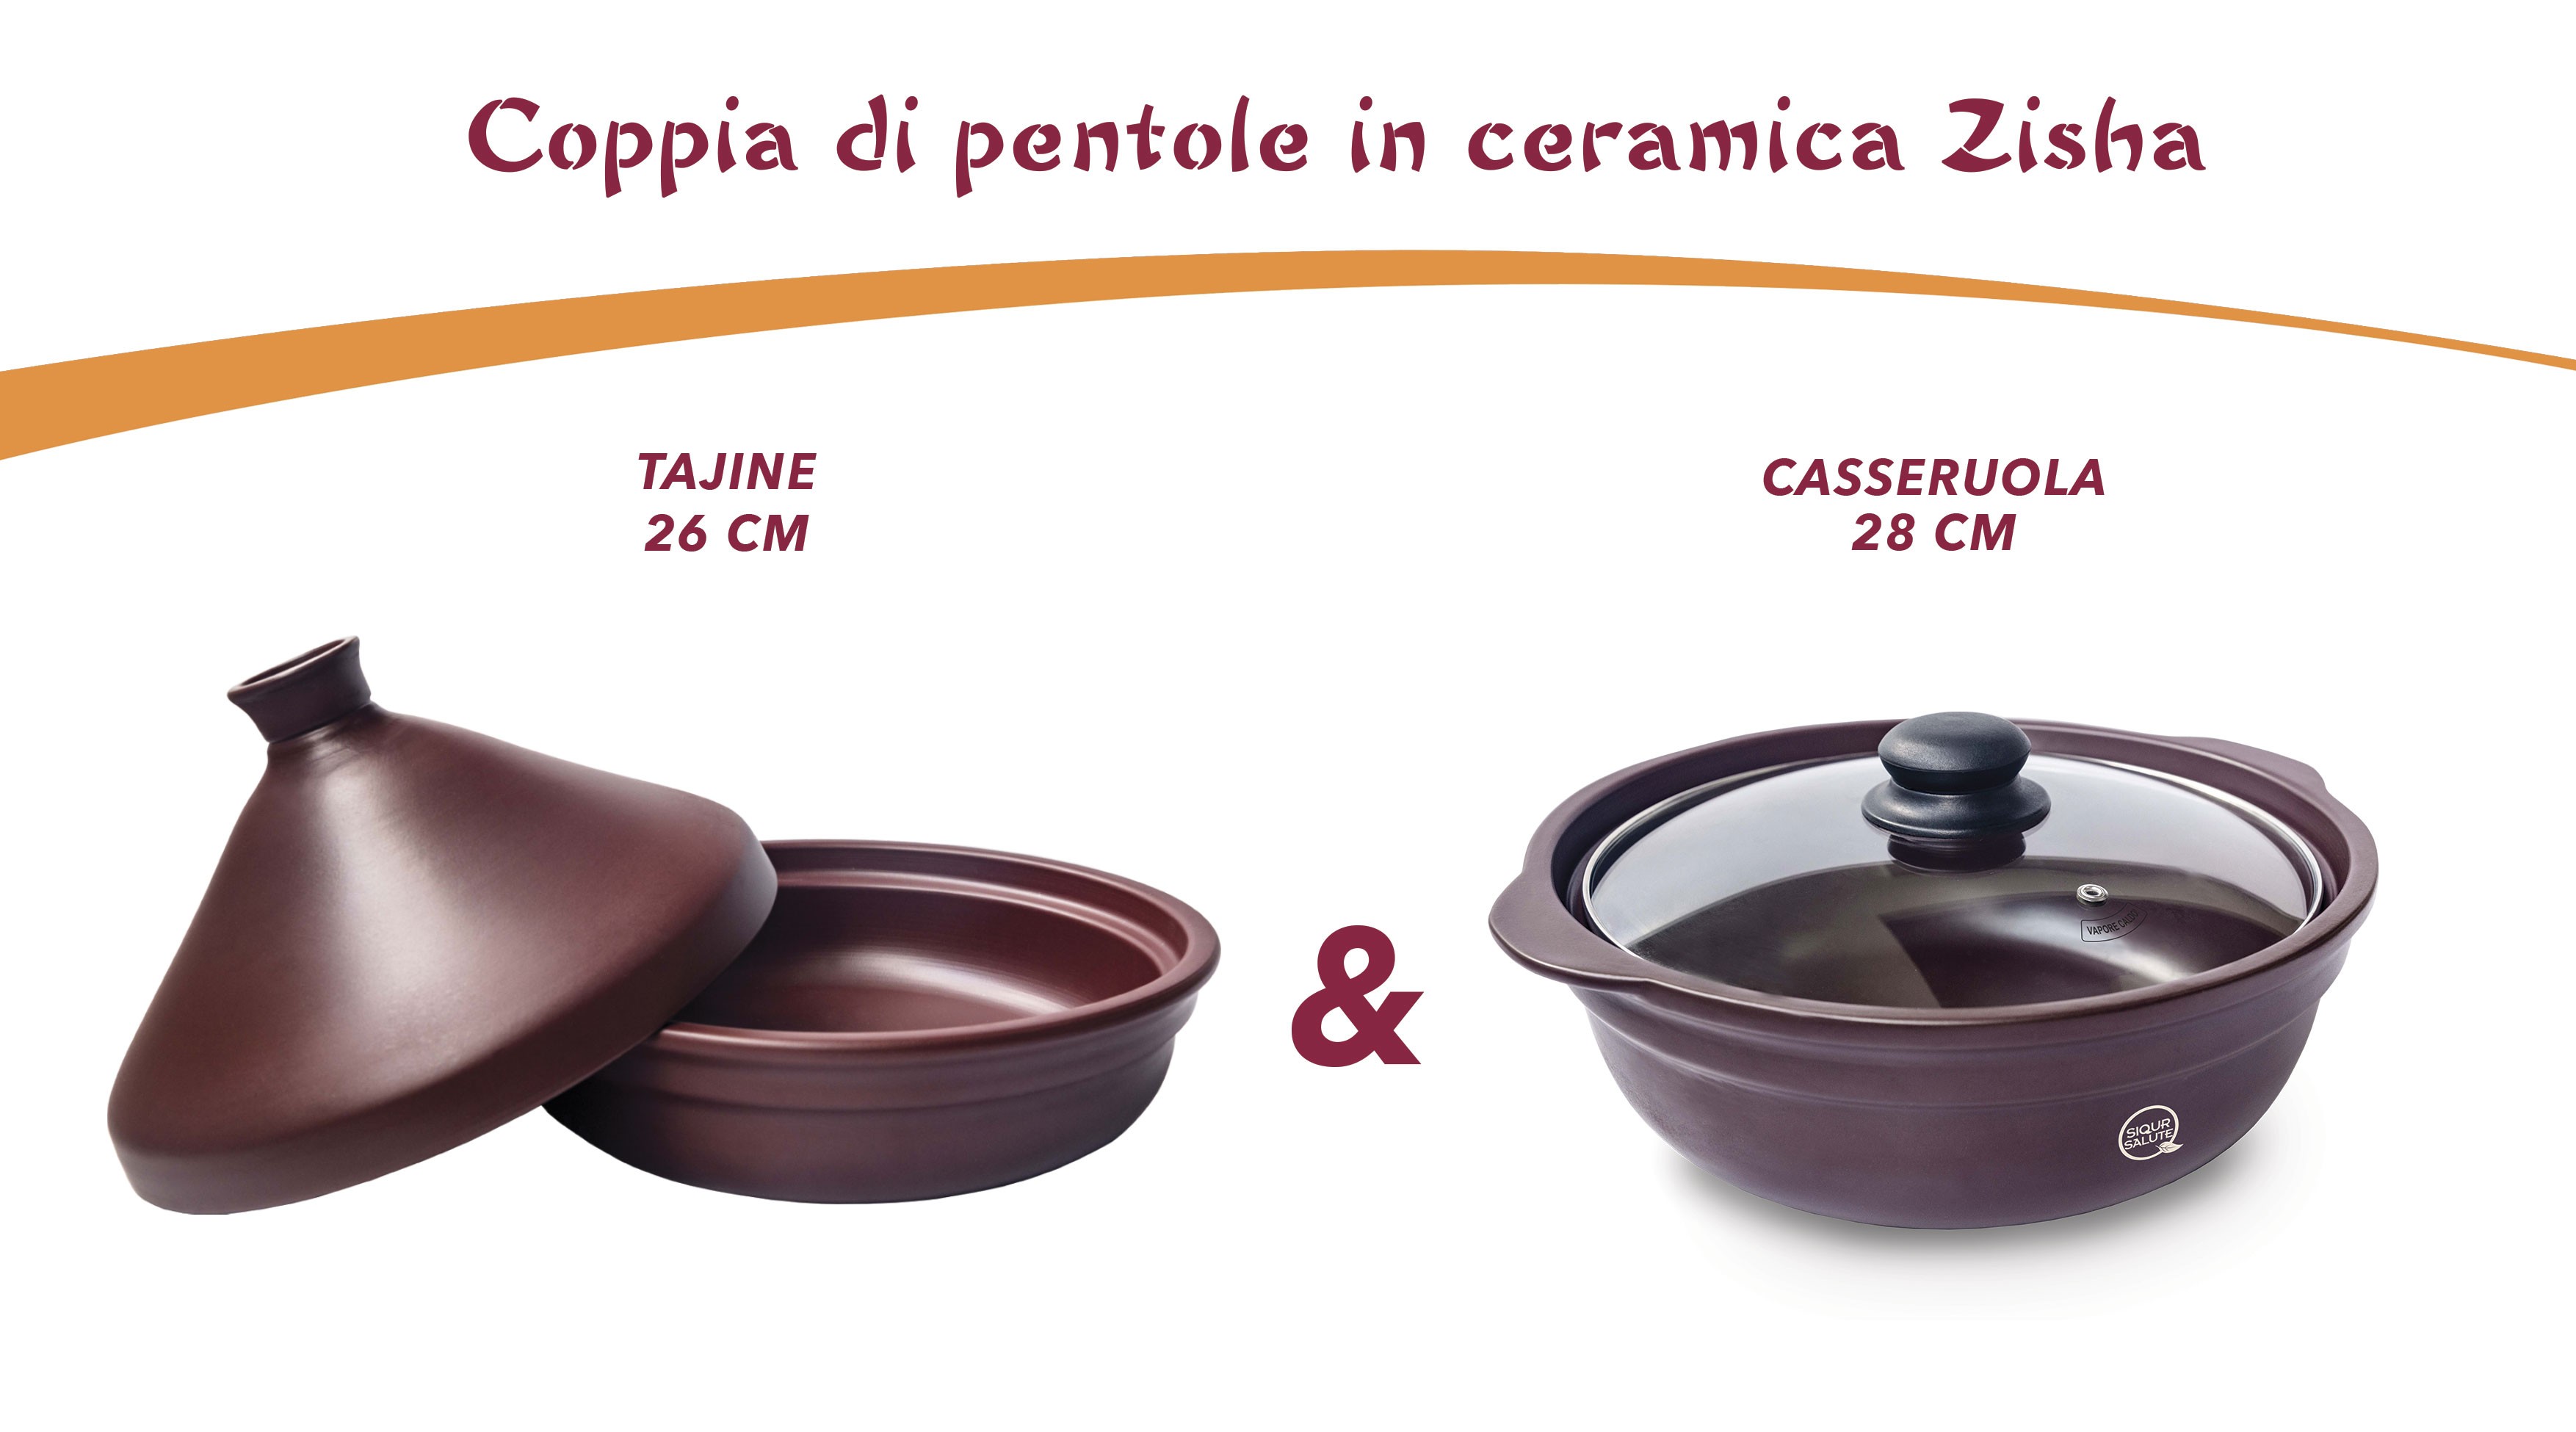 Coppia di pentole in ceramica Zisha (Tajine 26 & Casseruola 28)